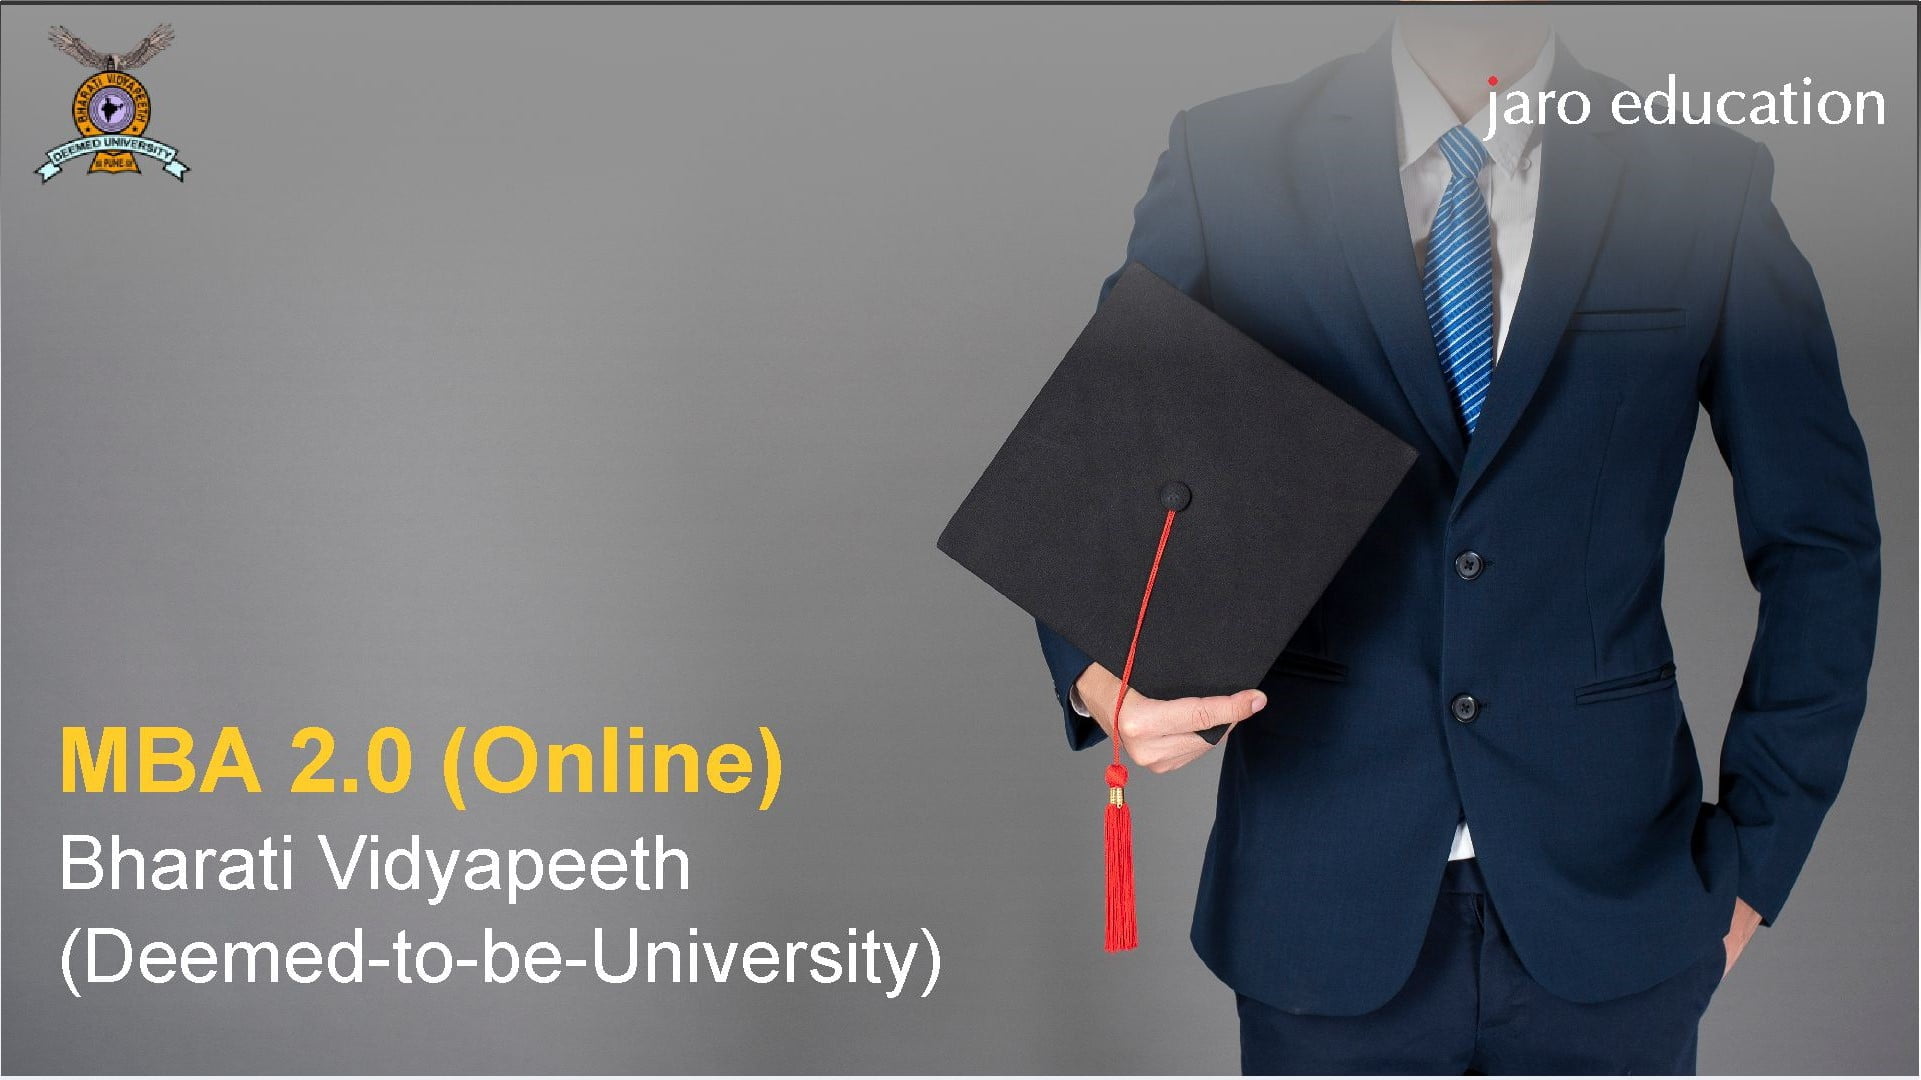 Online MBA Program Jaro